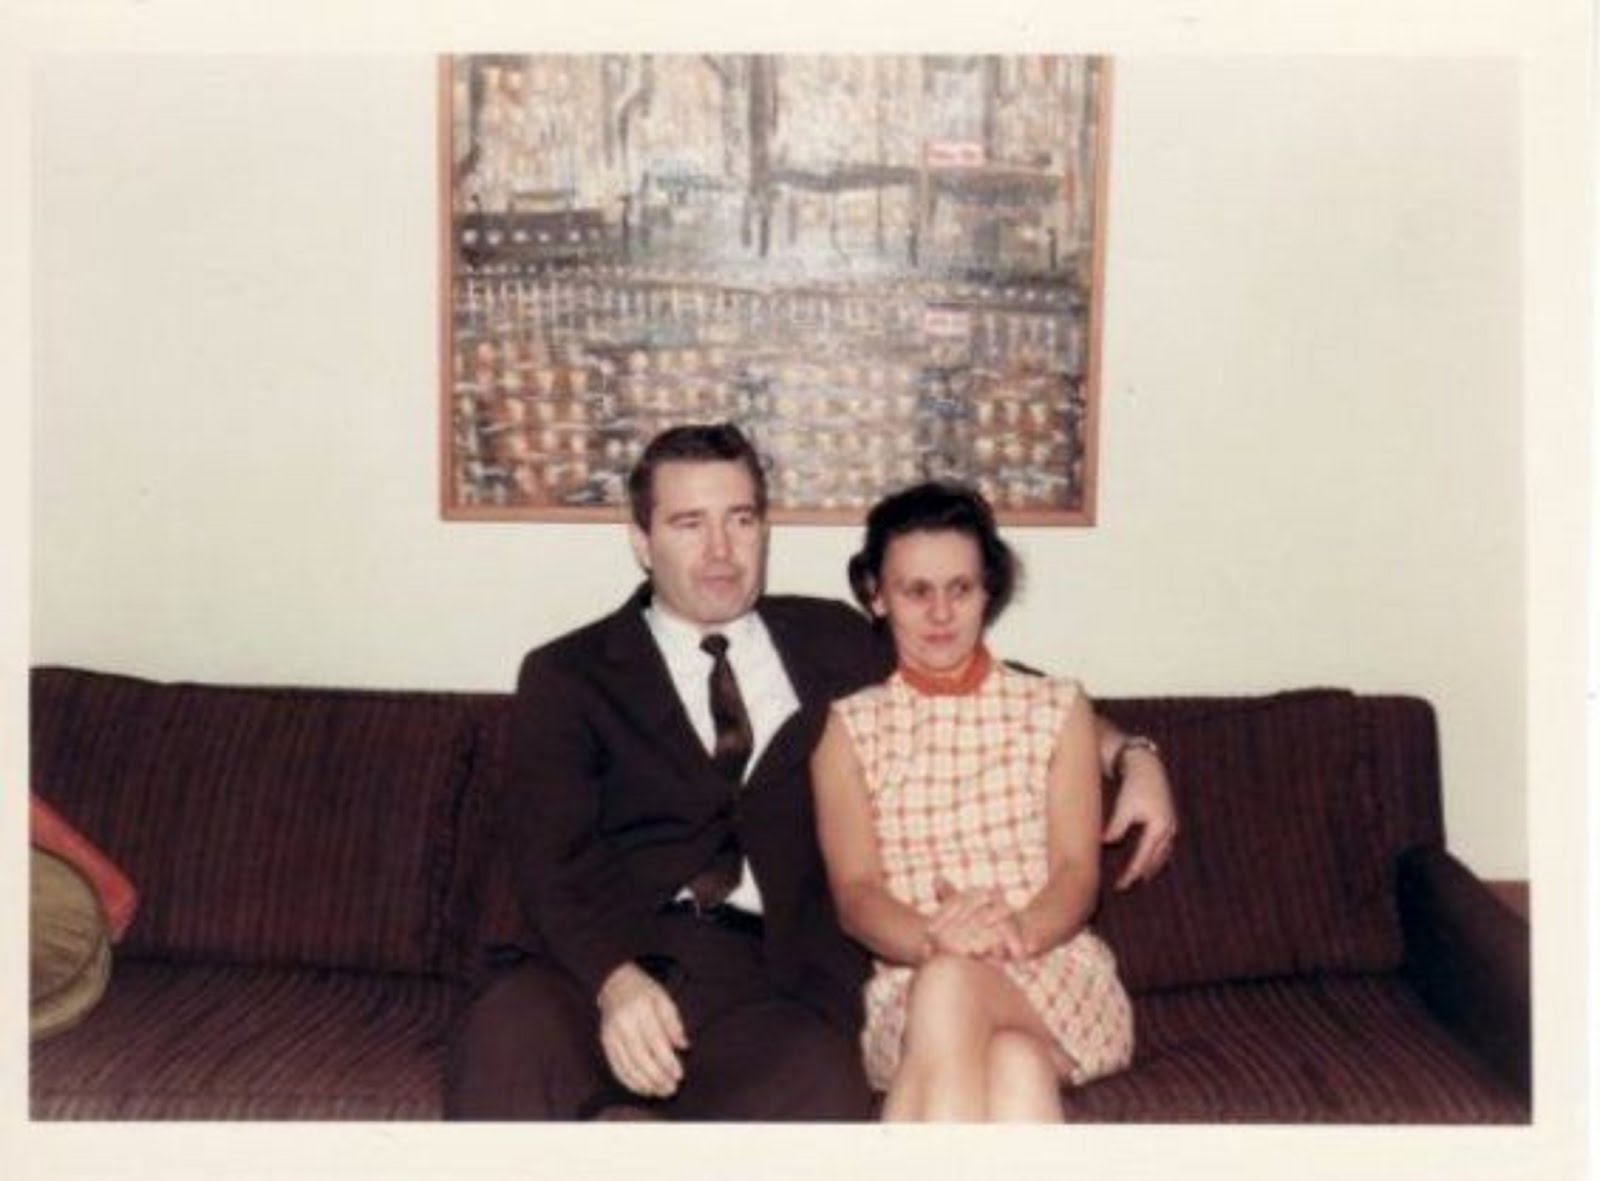 MEET MY FAMILY - MY DAD ZELMAR B. PAYNE AND MY MOM IRENE V. PAYNE